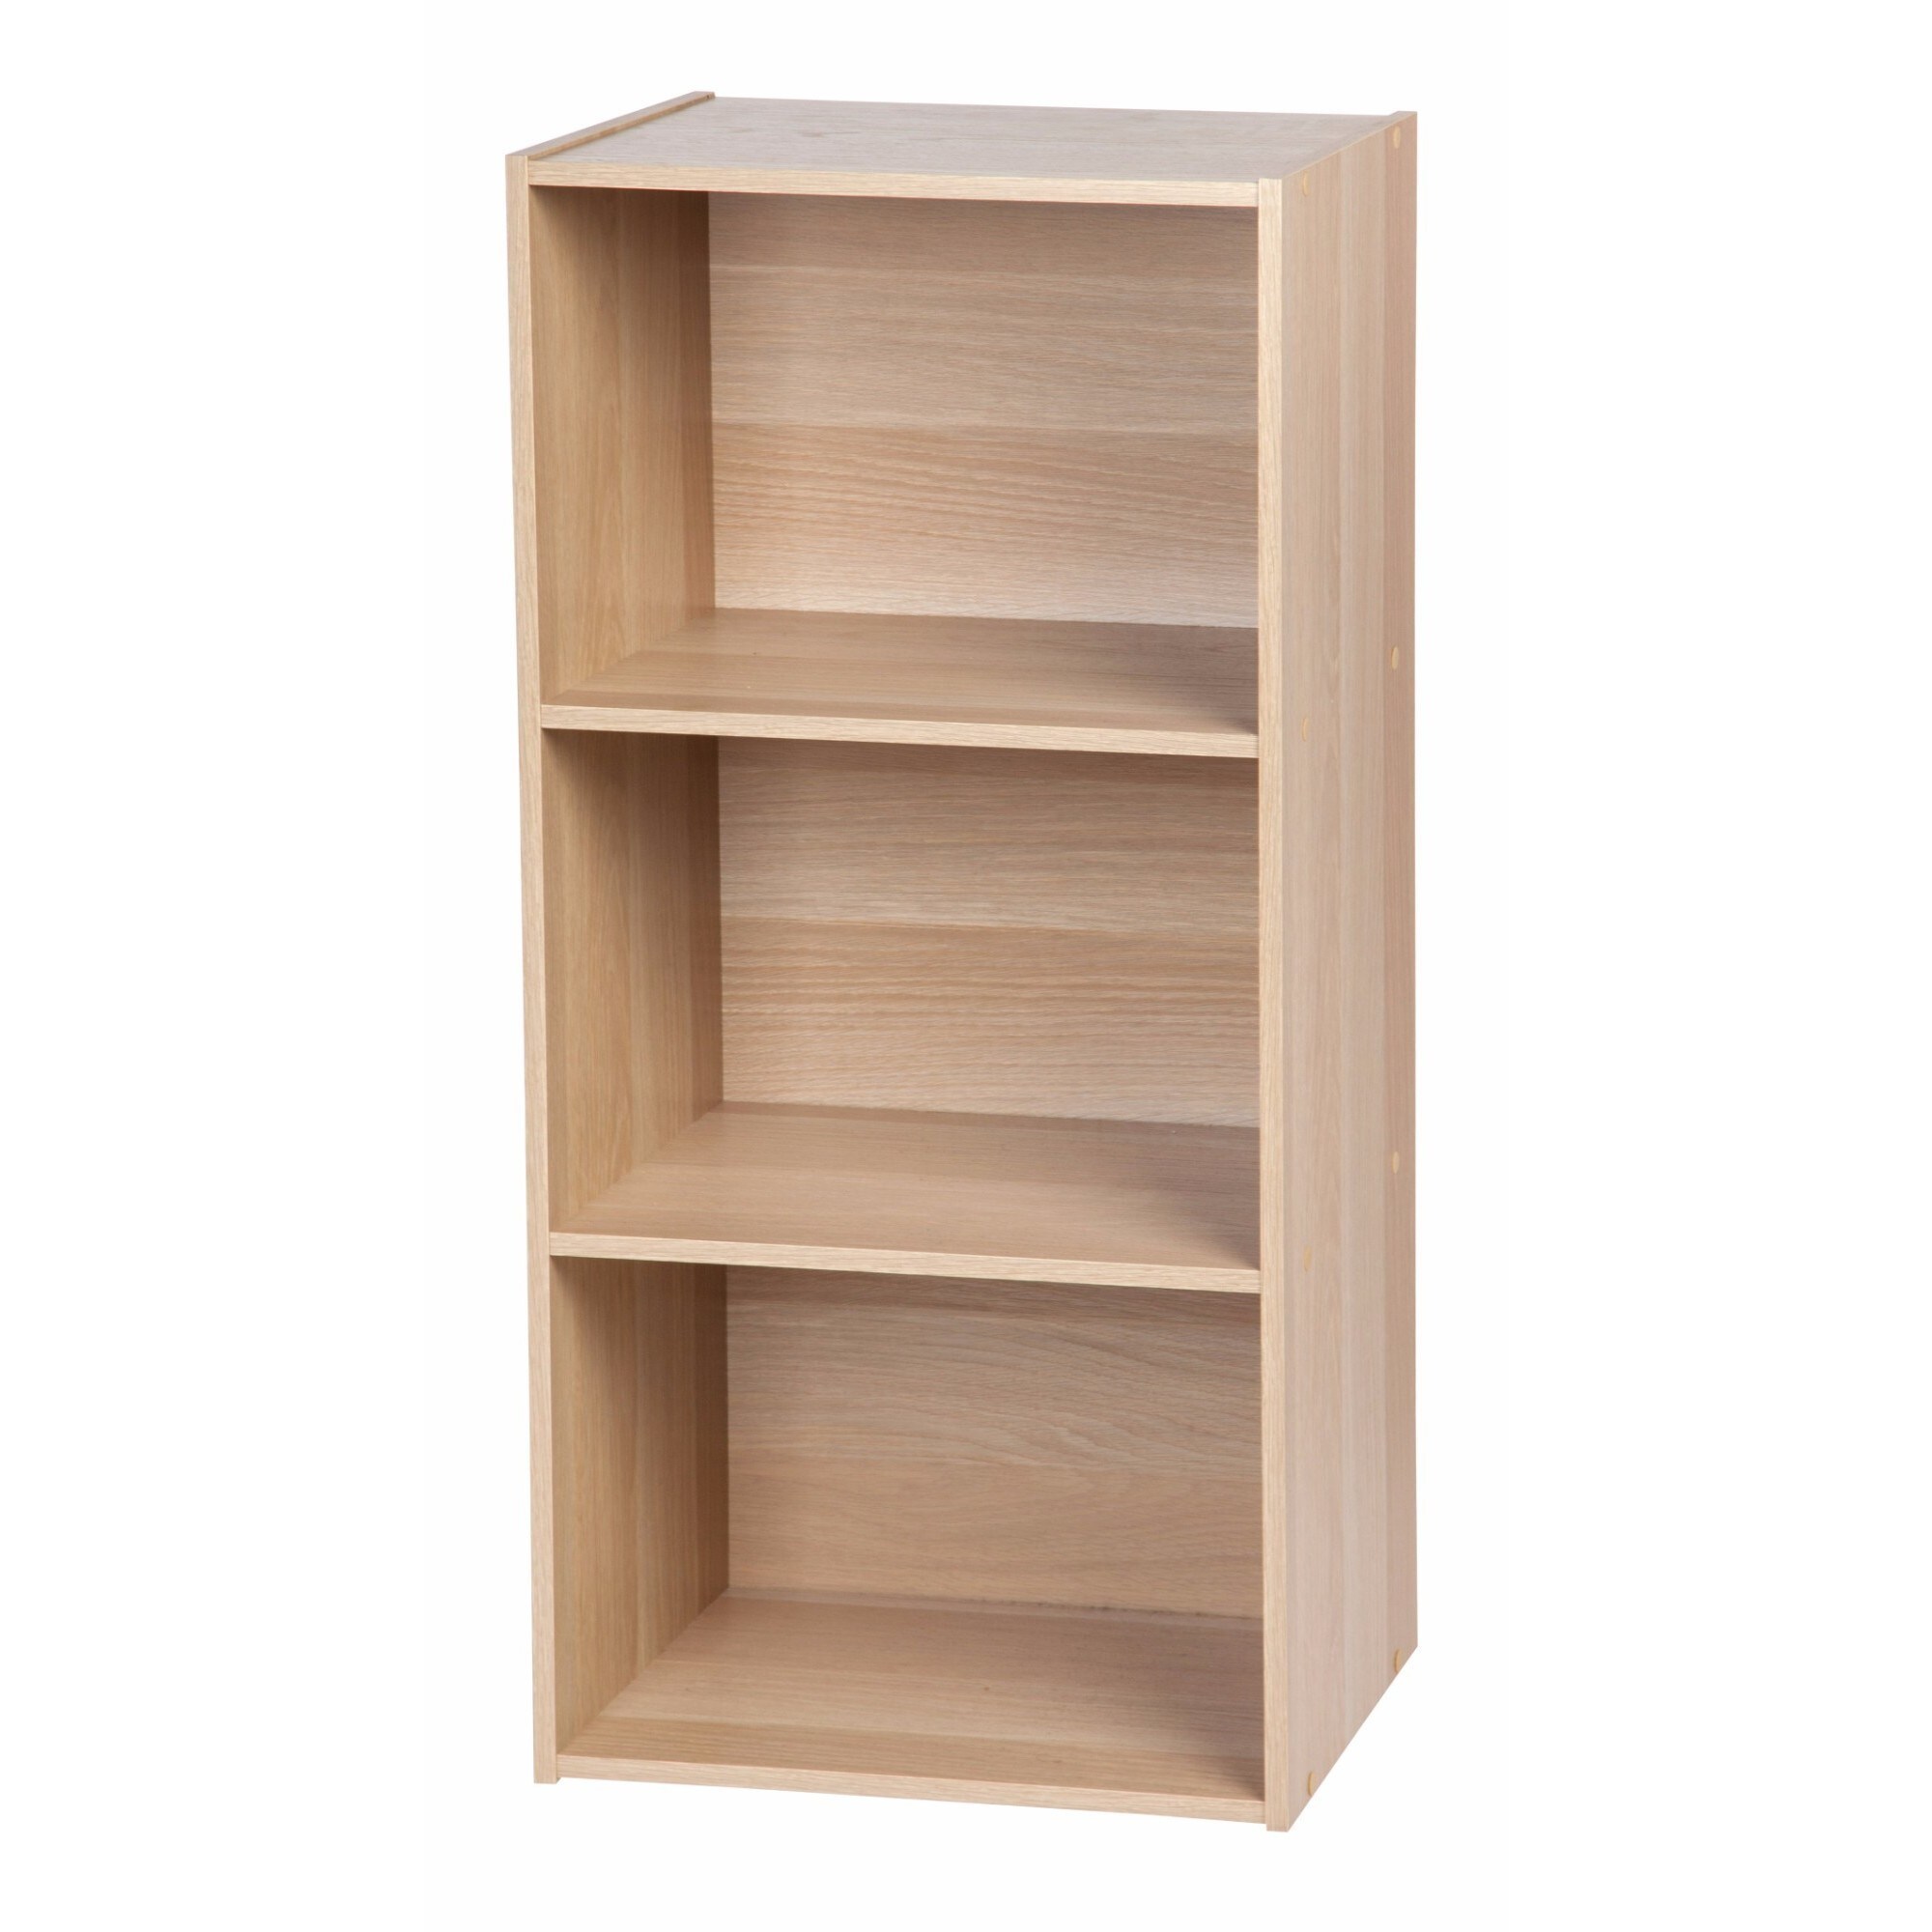 https://ak1.ostkcdn.com/images/products/17158984/Iris-3-tier-Basic-Light-Brown-Wood-Bookcase-Storage-Shelf-b11330a3-32d5-4d9c-ac06-79f13904f9ce.jpg